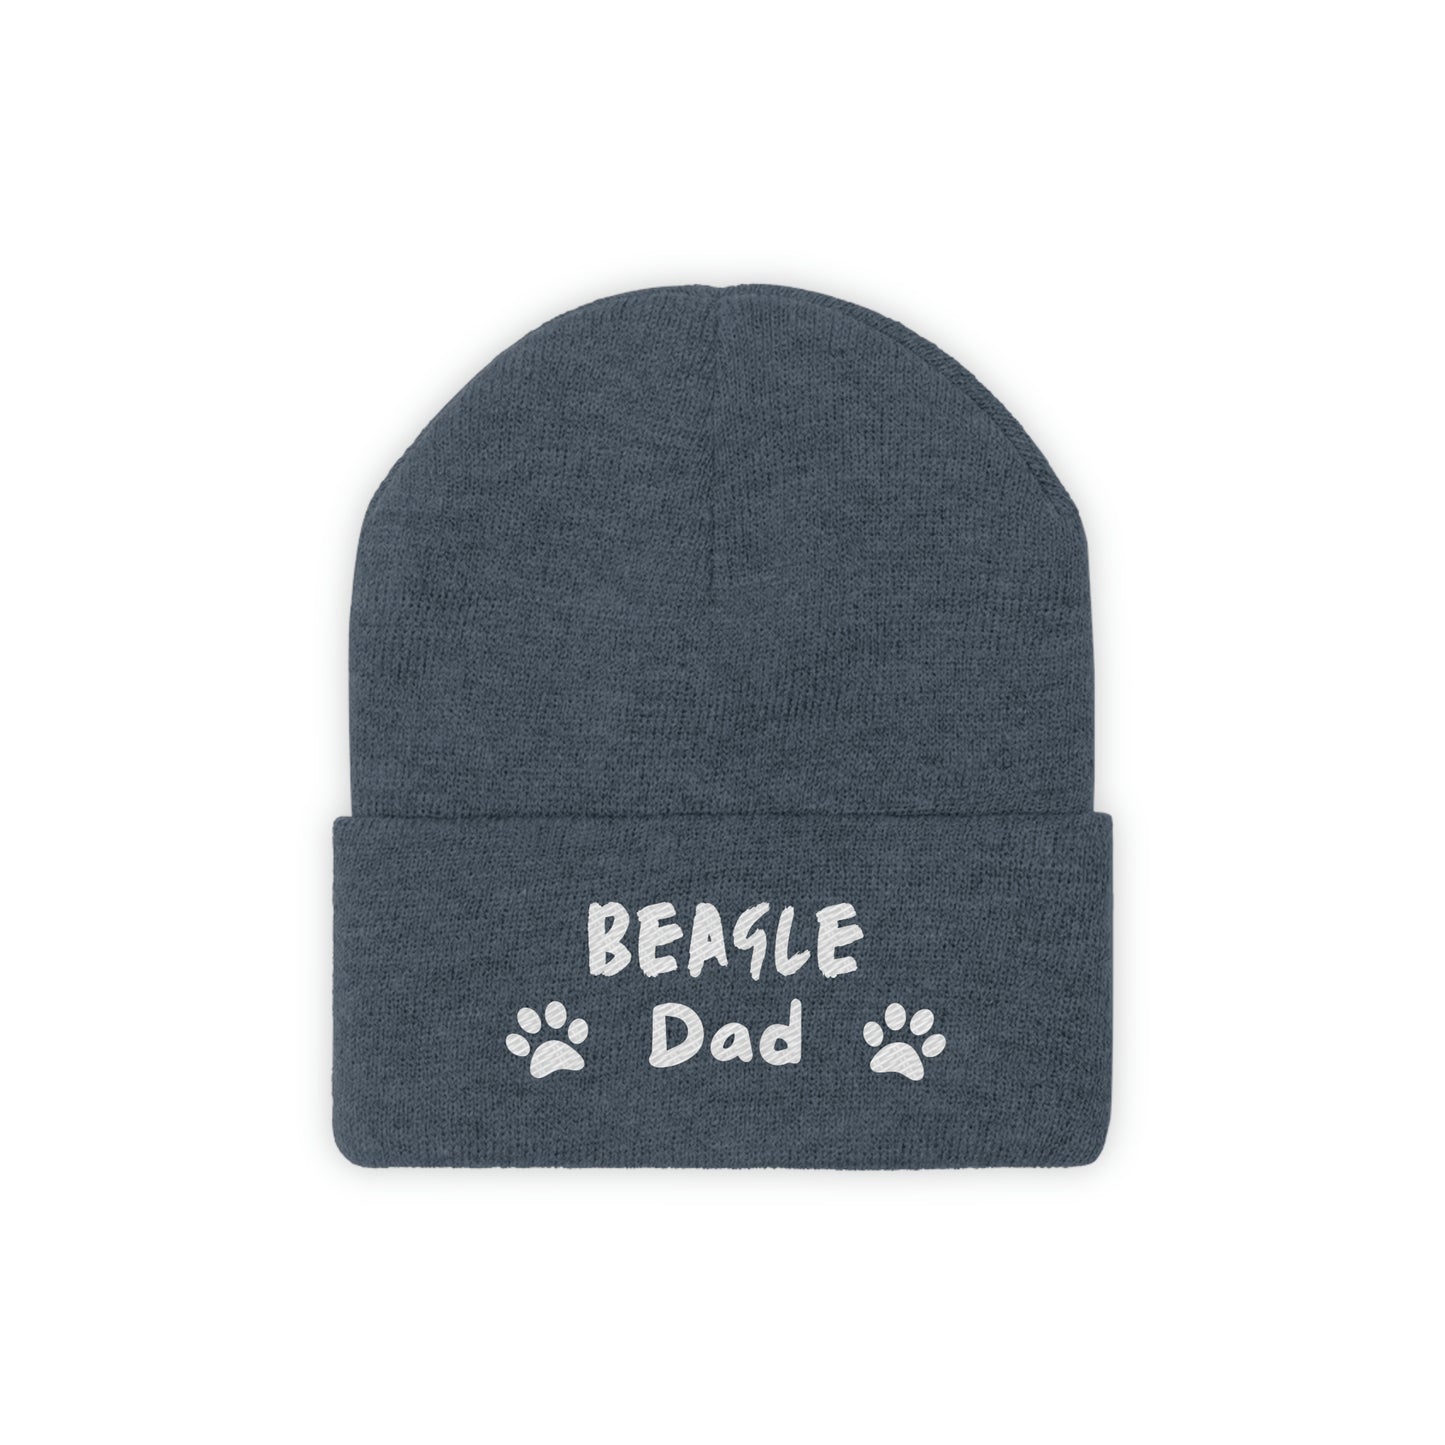 Beagle Dad Knit Ski Cap